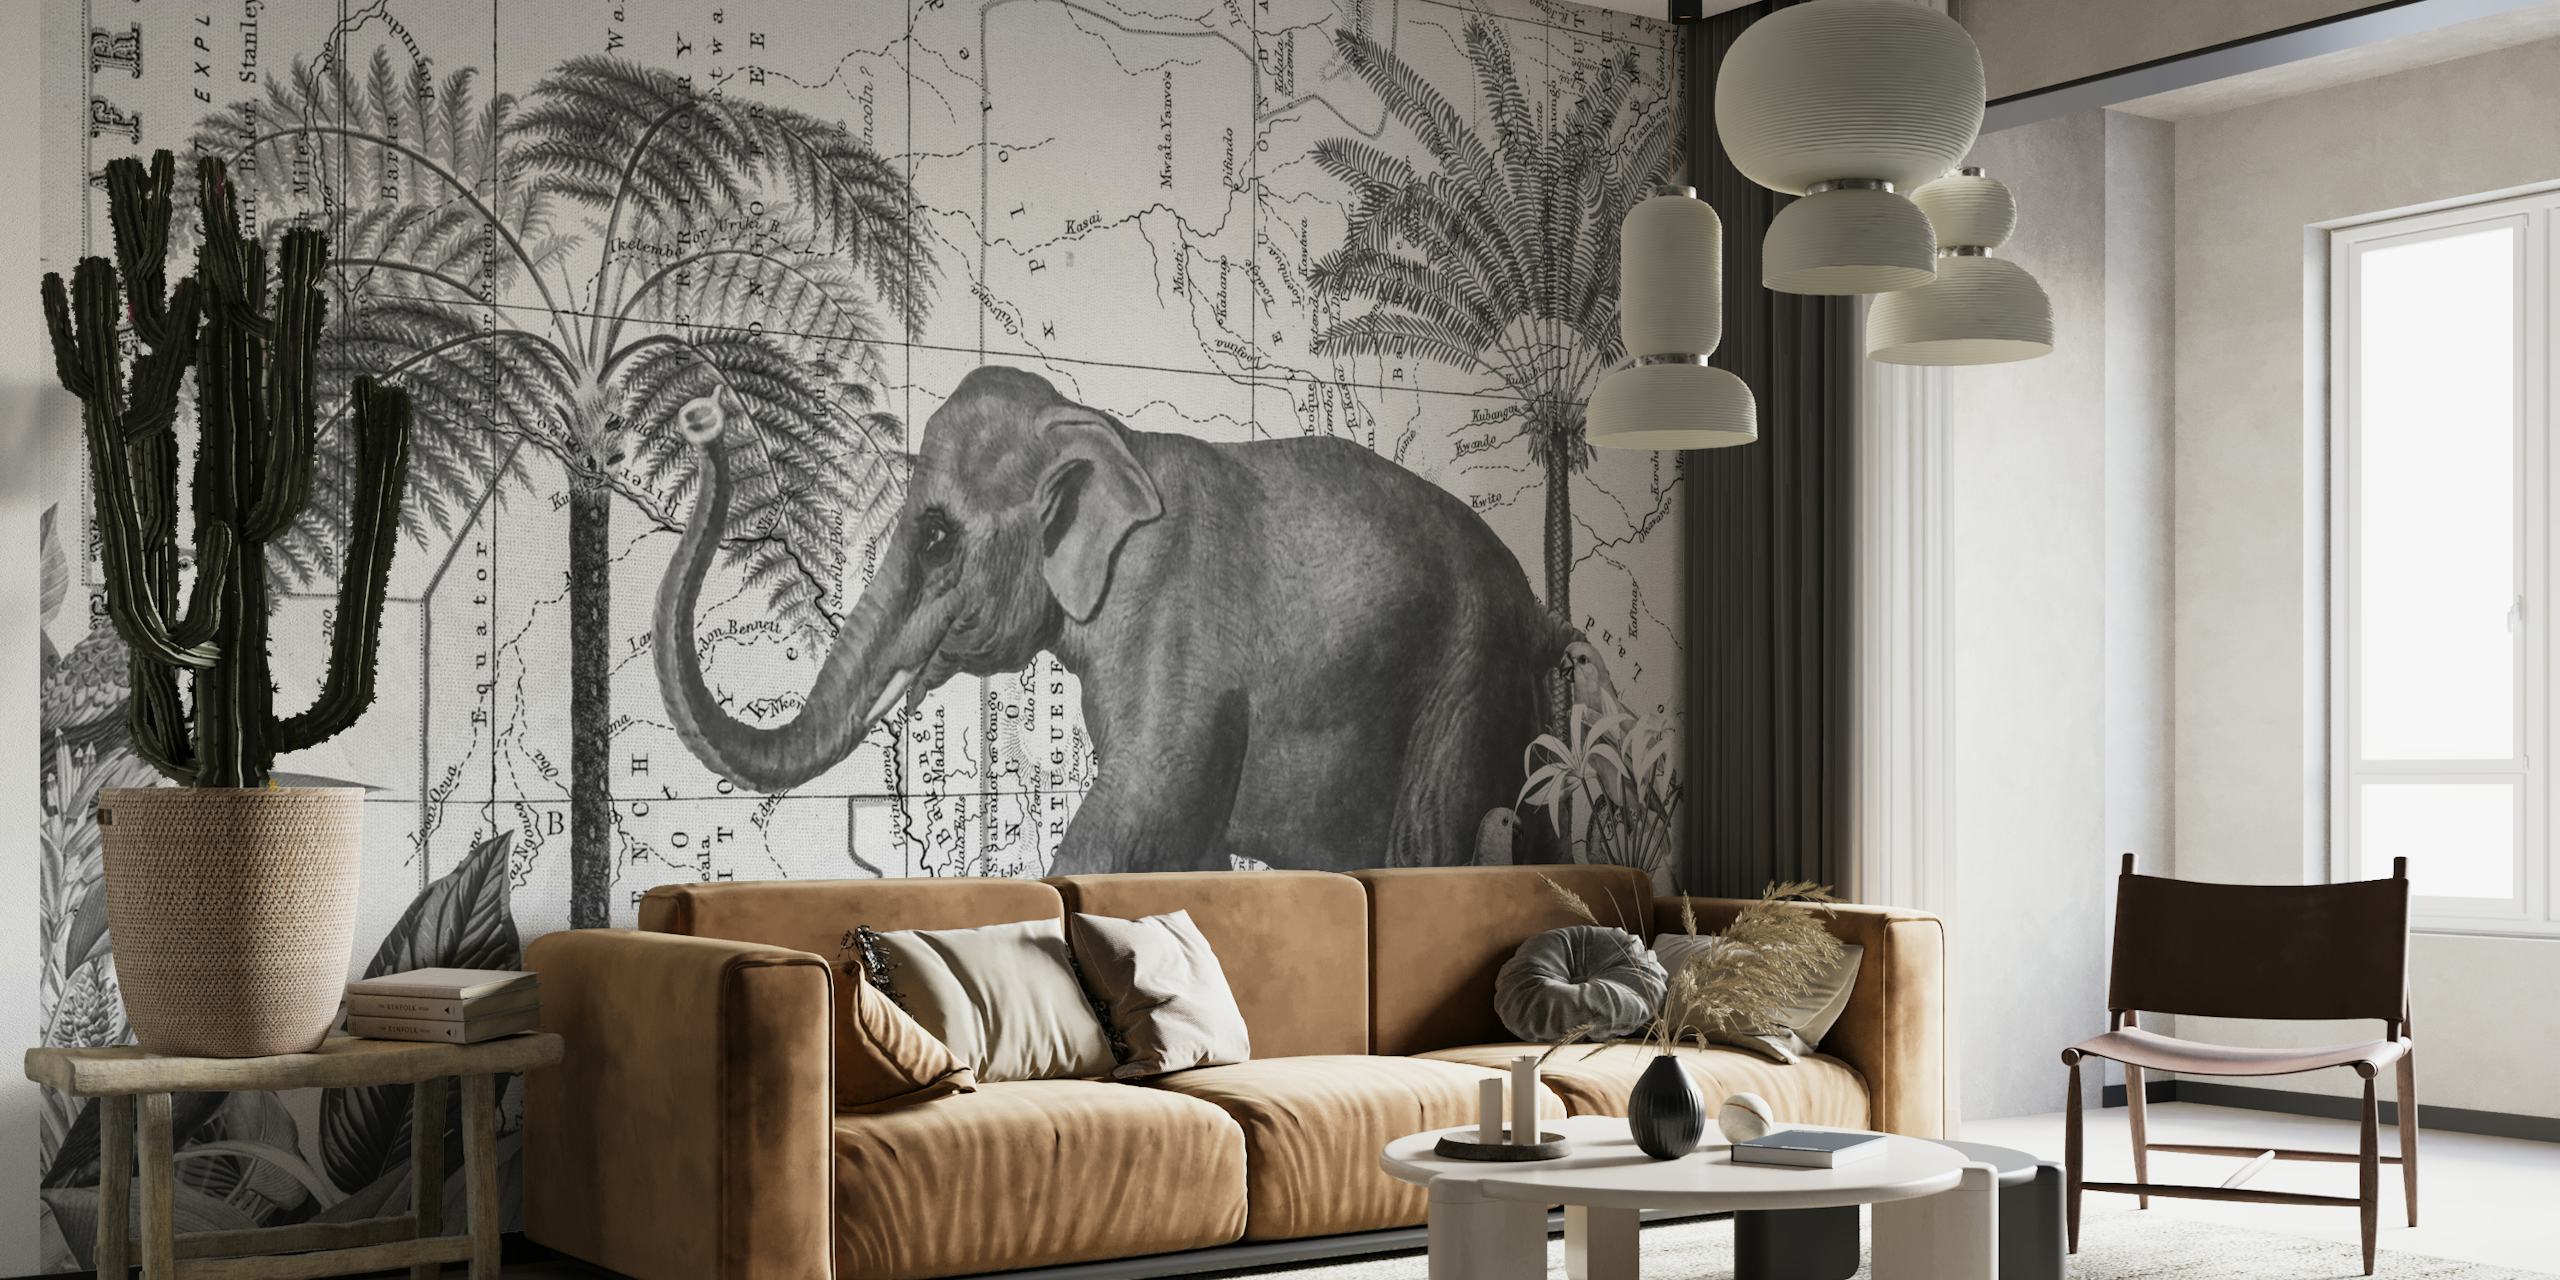 Explore Africa Elephant wallpaper